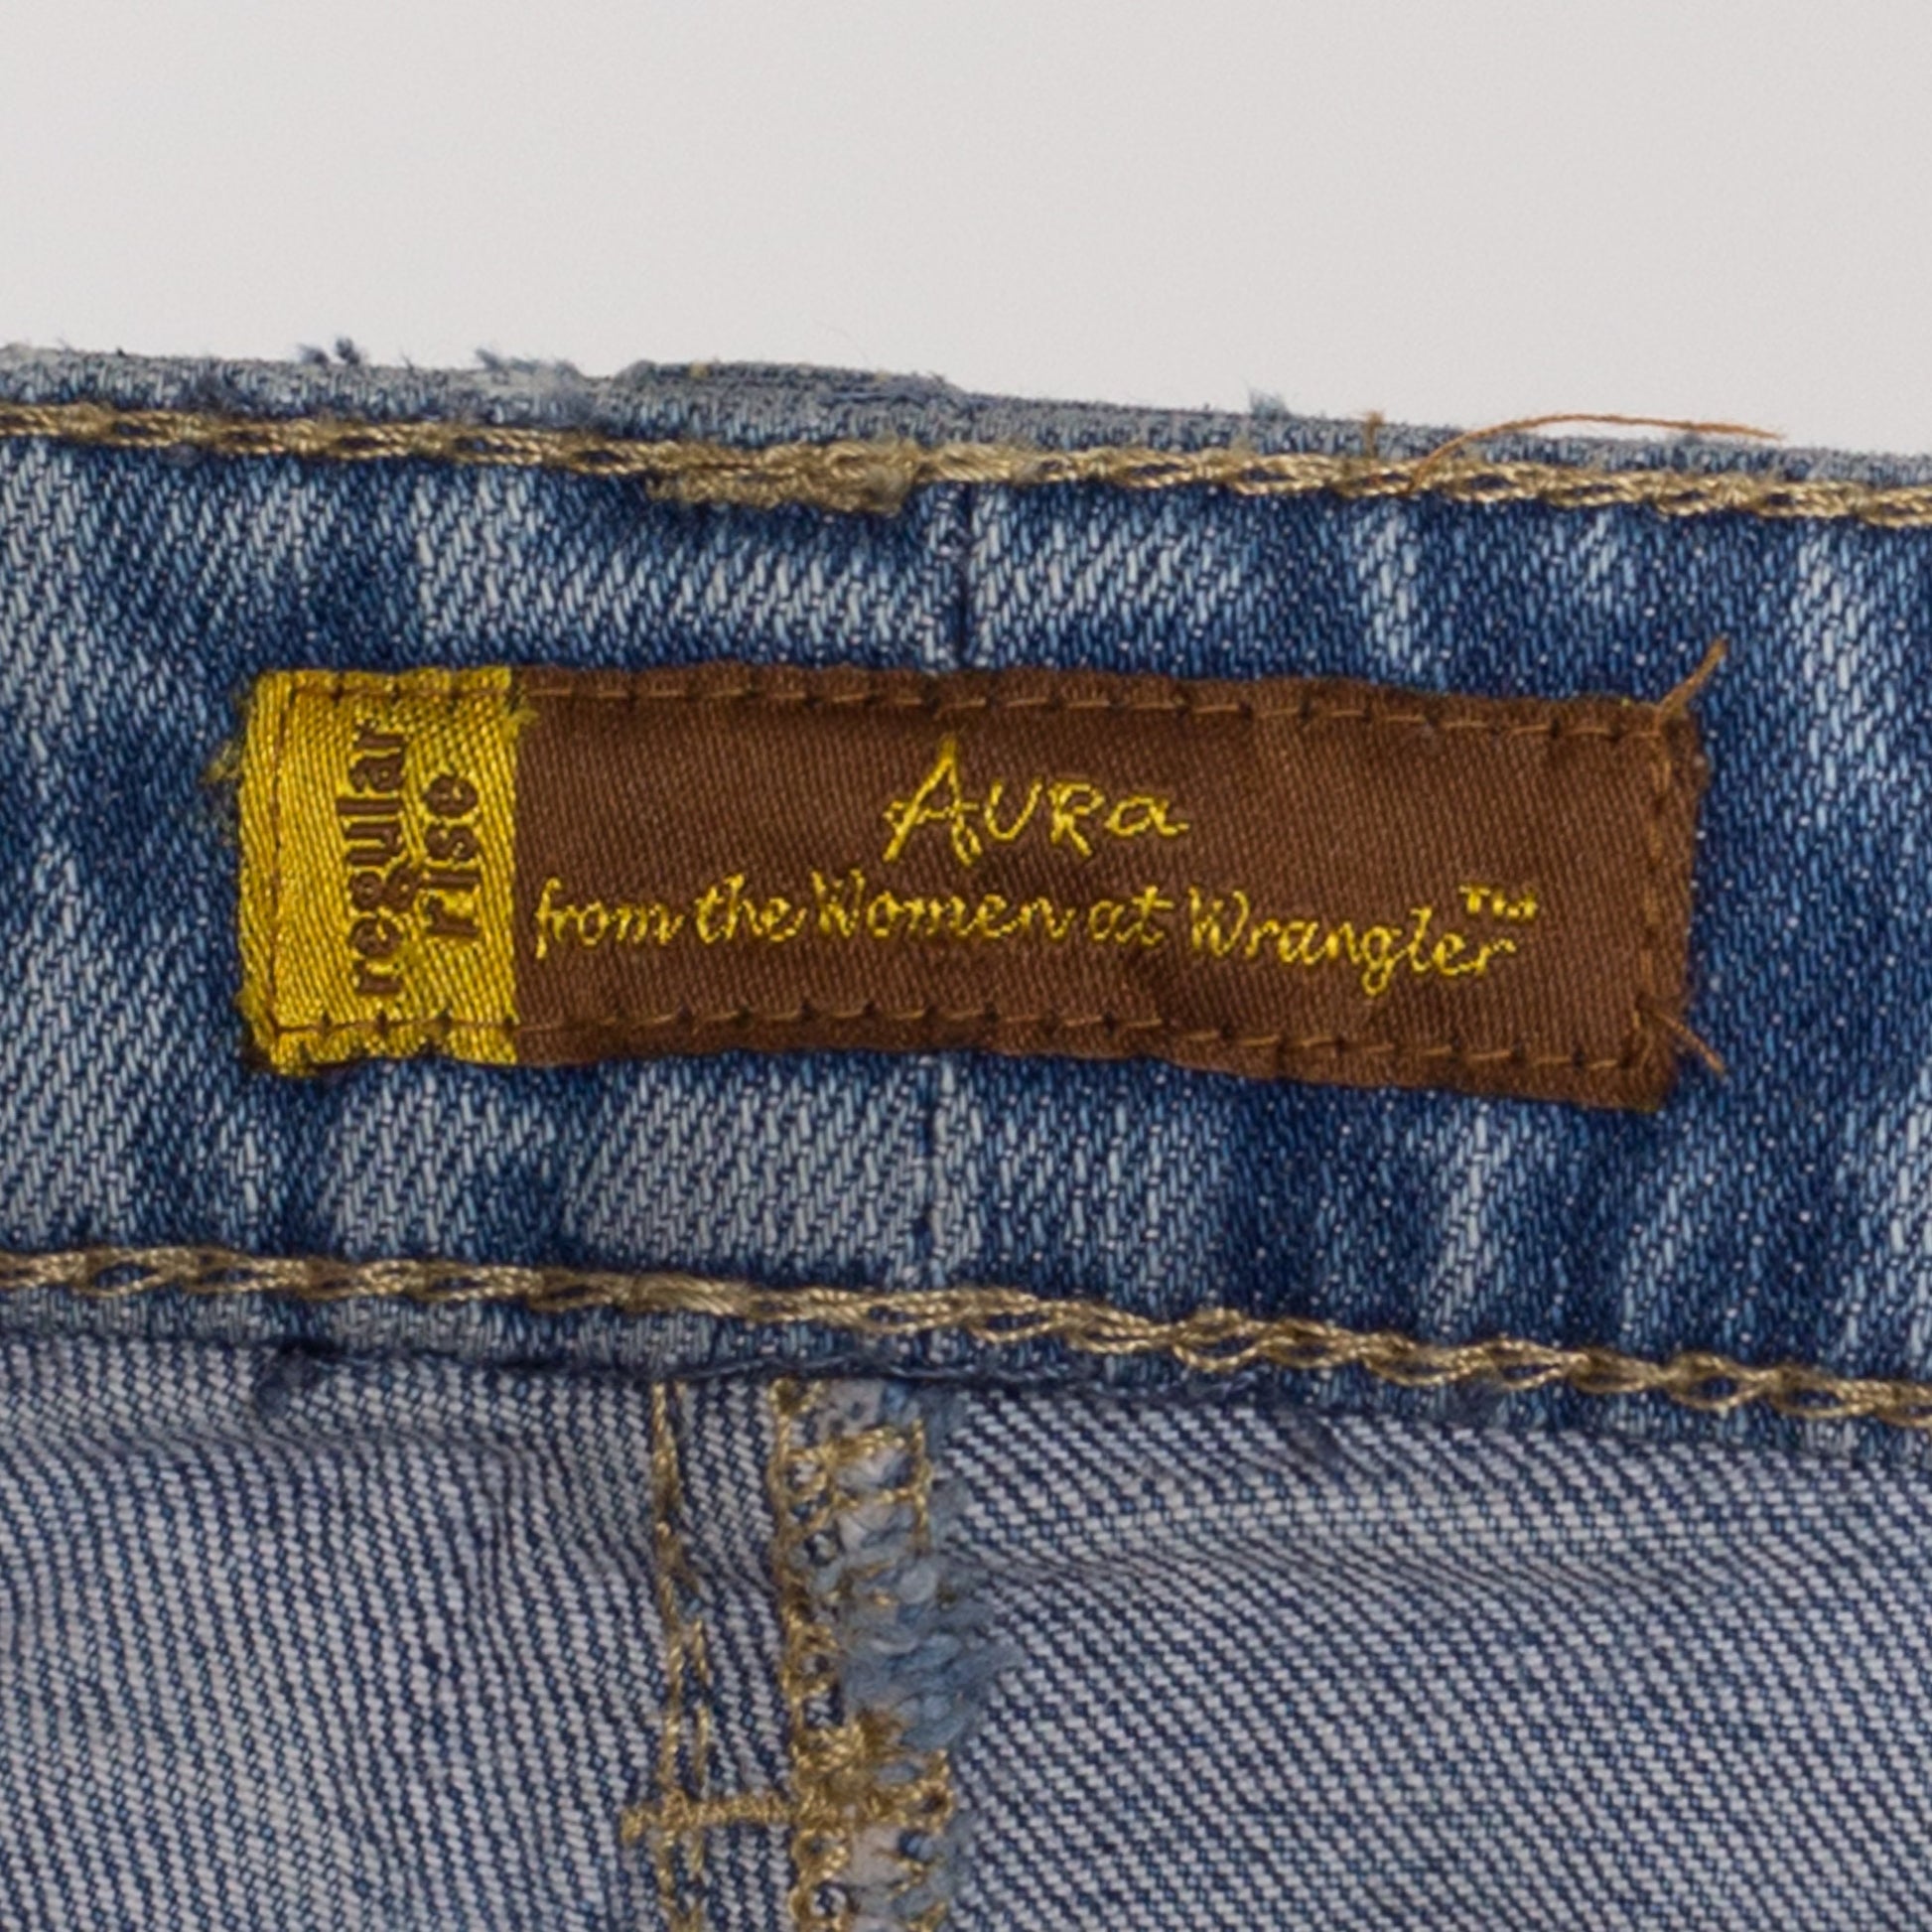 Petite Small Y2K Mid Rise Ankle Jeans | Vintage Aura Wrangler Straight Leg Jeans